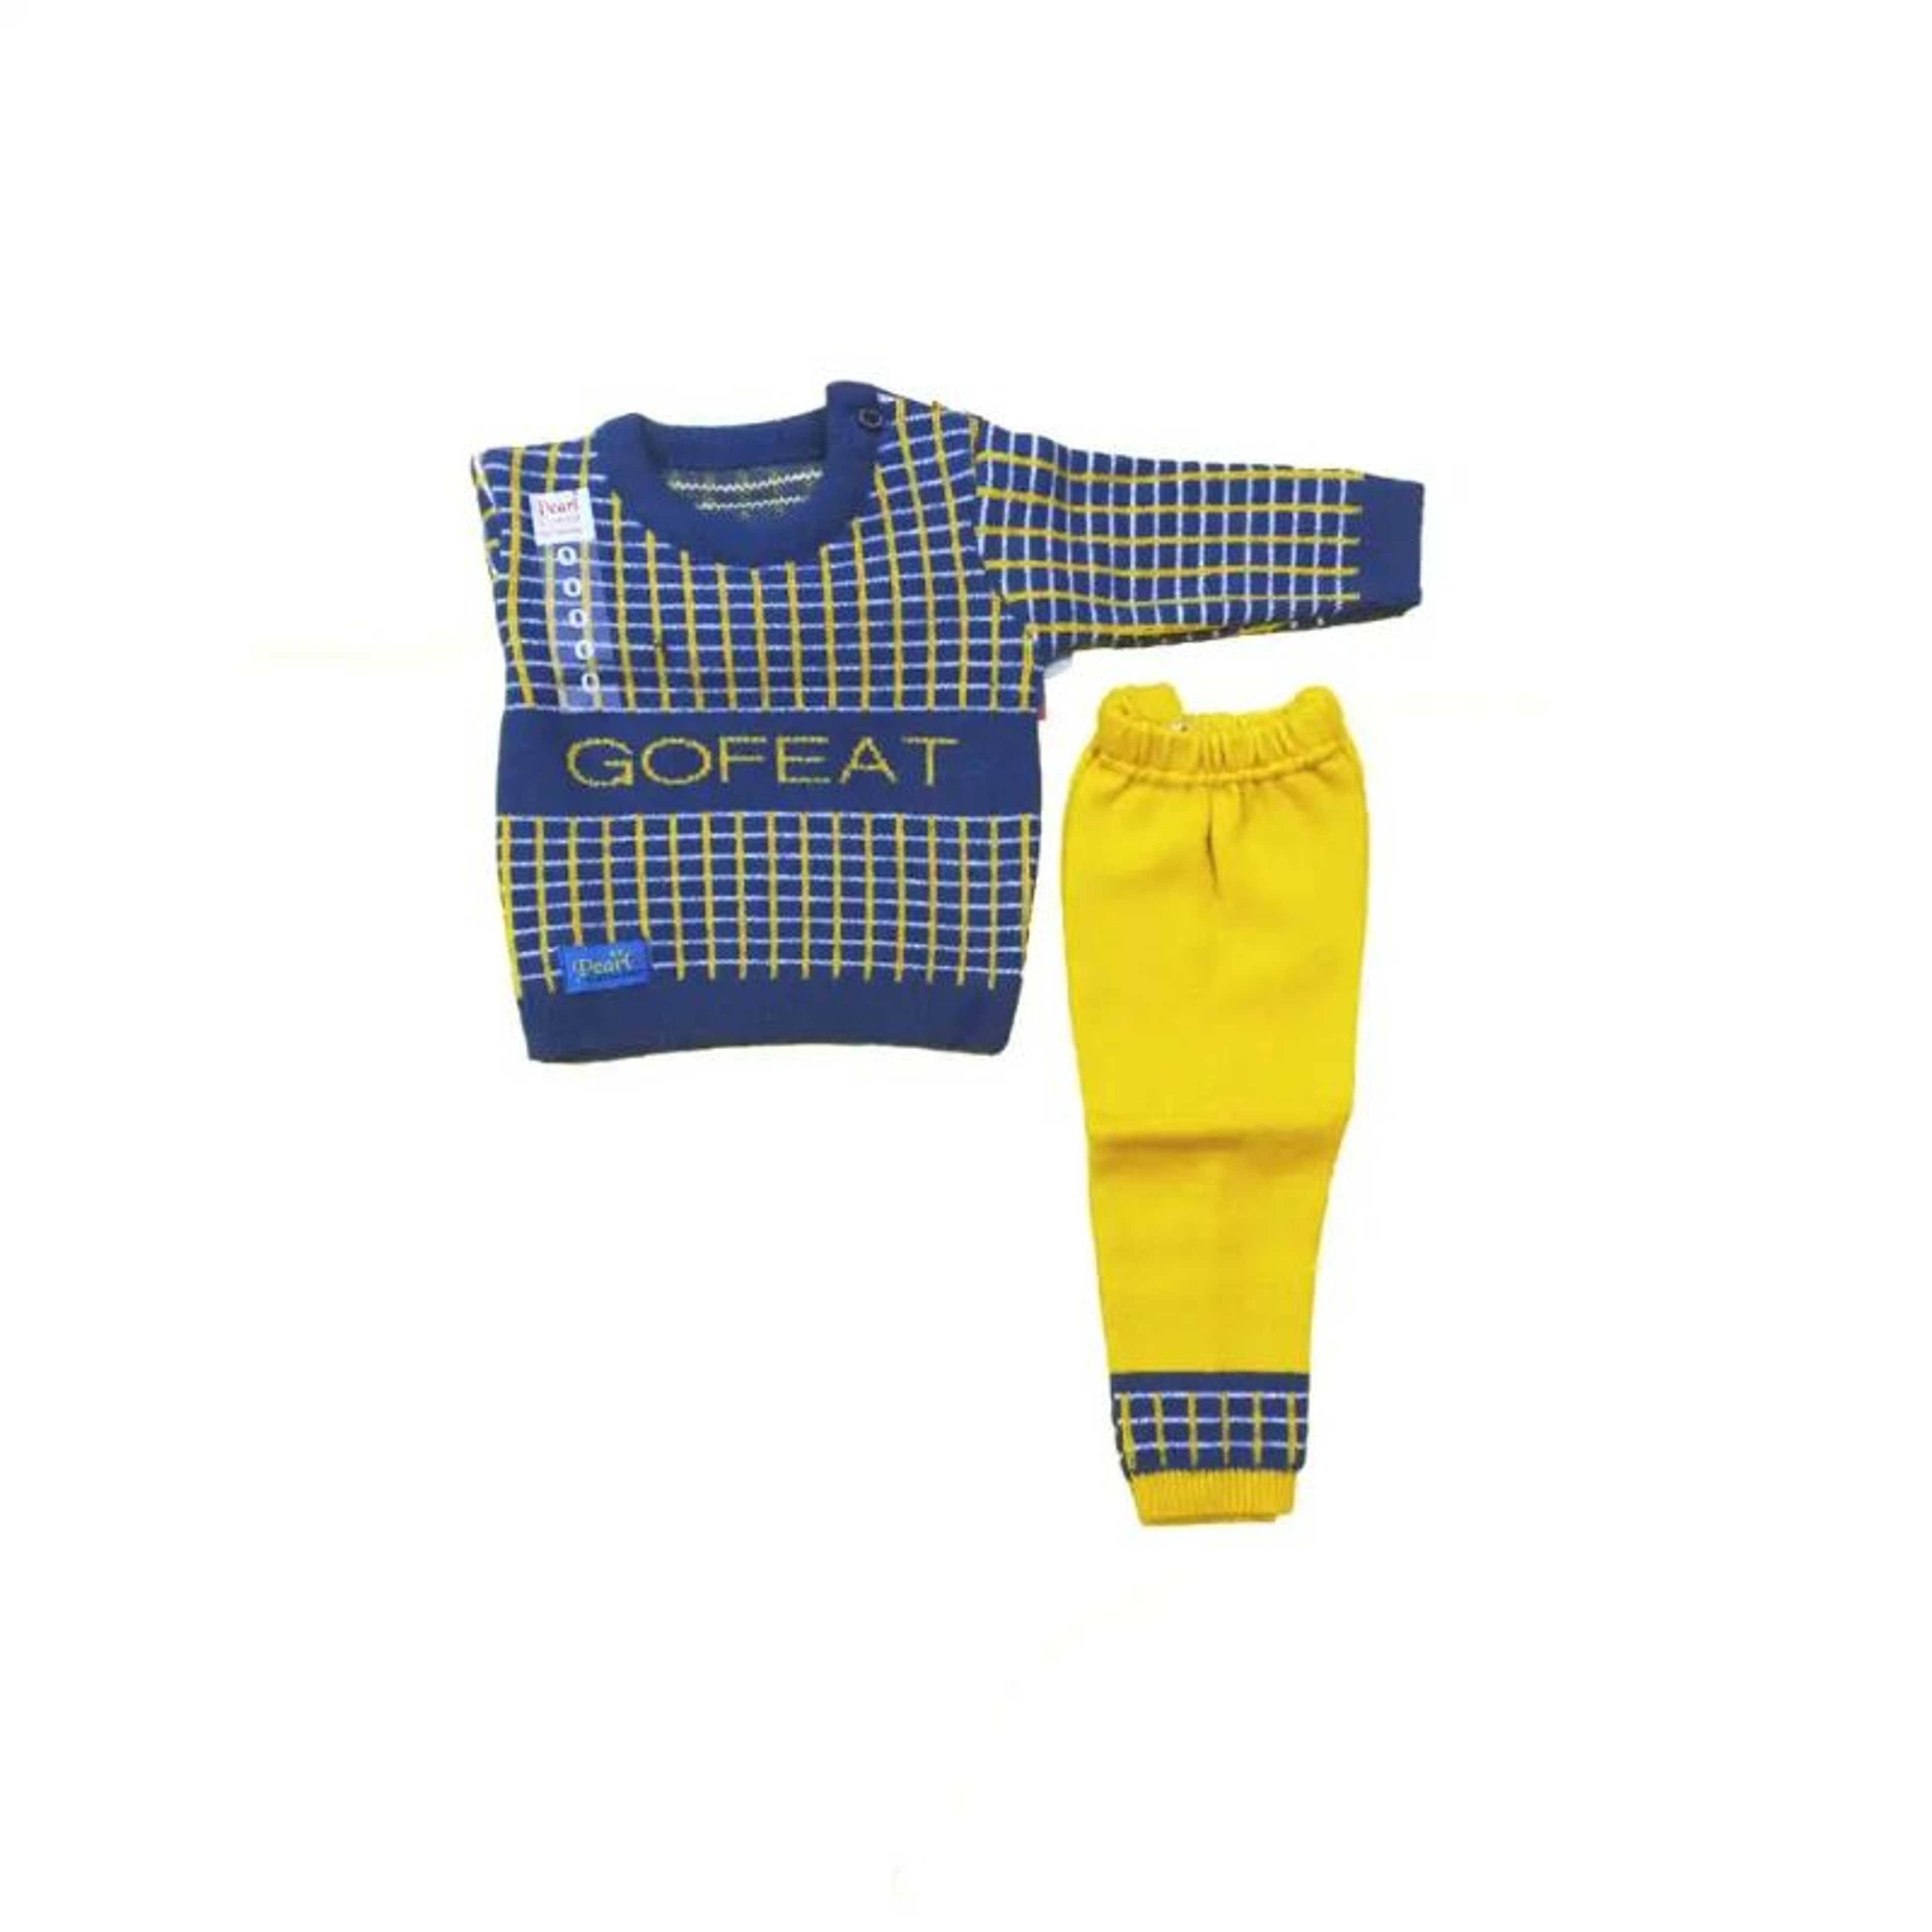 Gofeat Premium Winter unisex Clothing set ( New Born )
